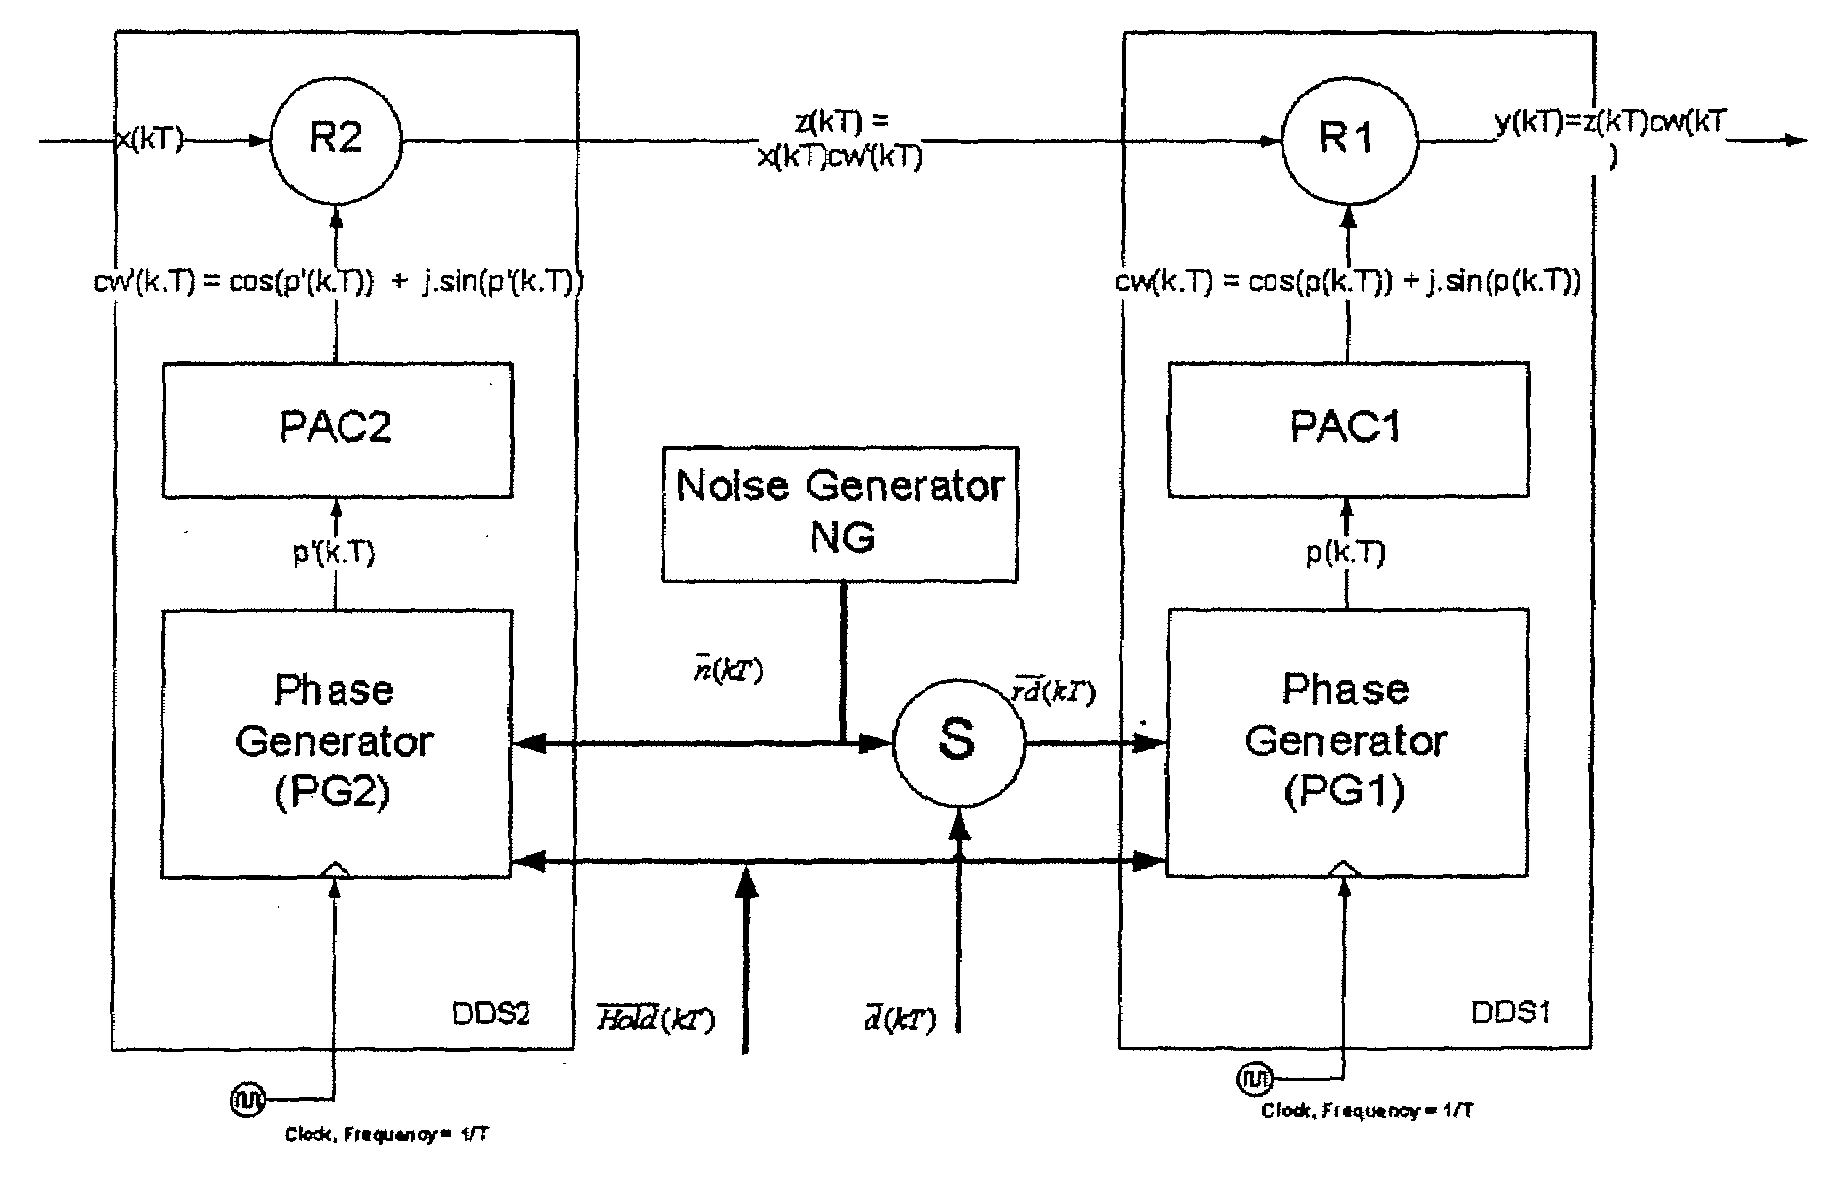 High performance mixed signal circuit